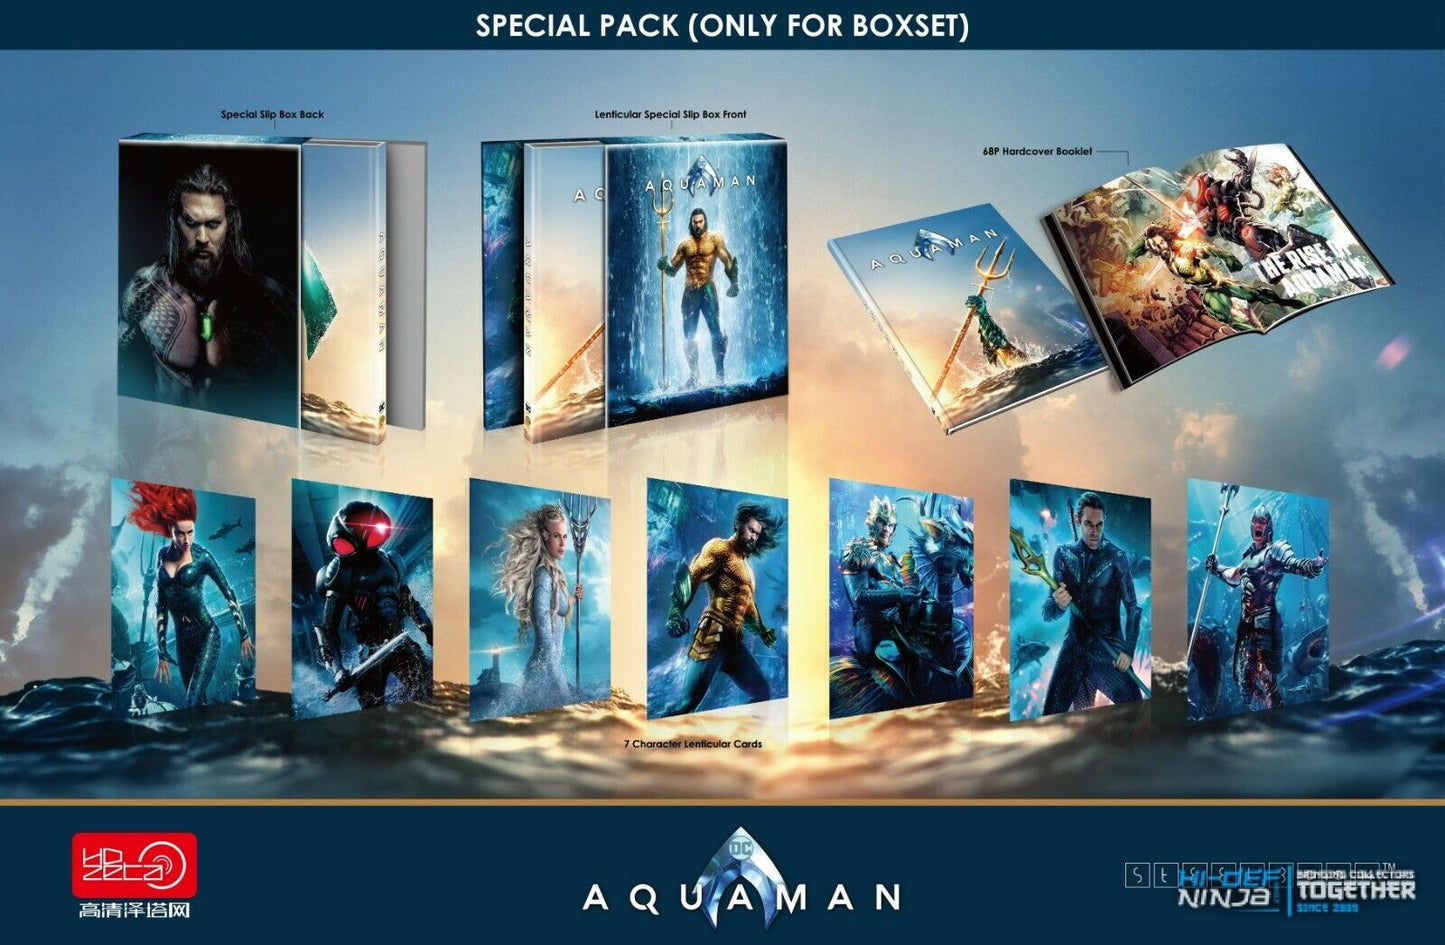 Aquaman 4K+3D+2D Blu-ray Steelbook HDZeta Exclusive One Click Box Set